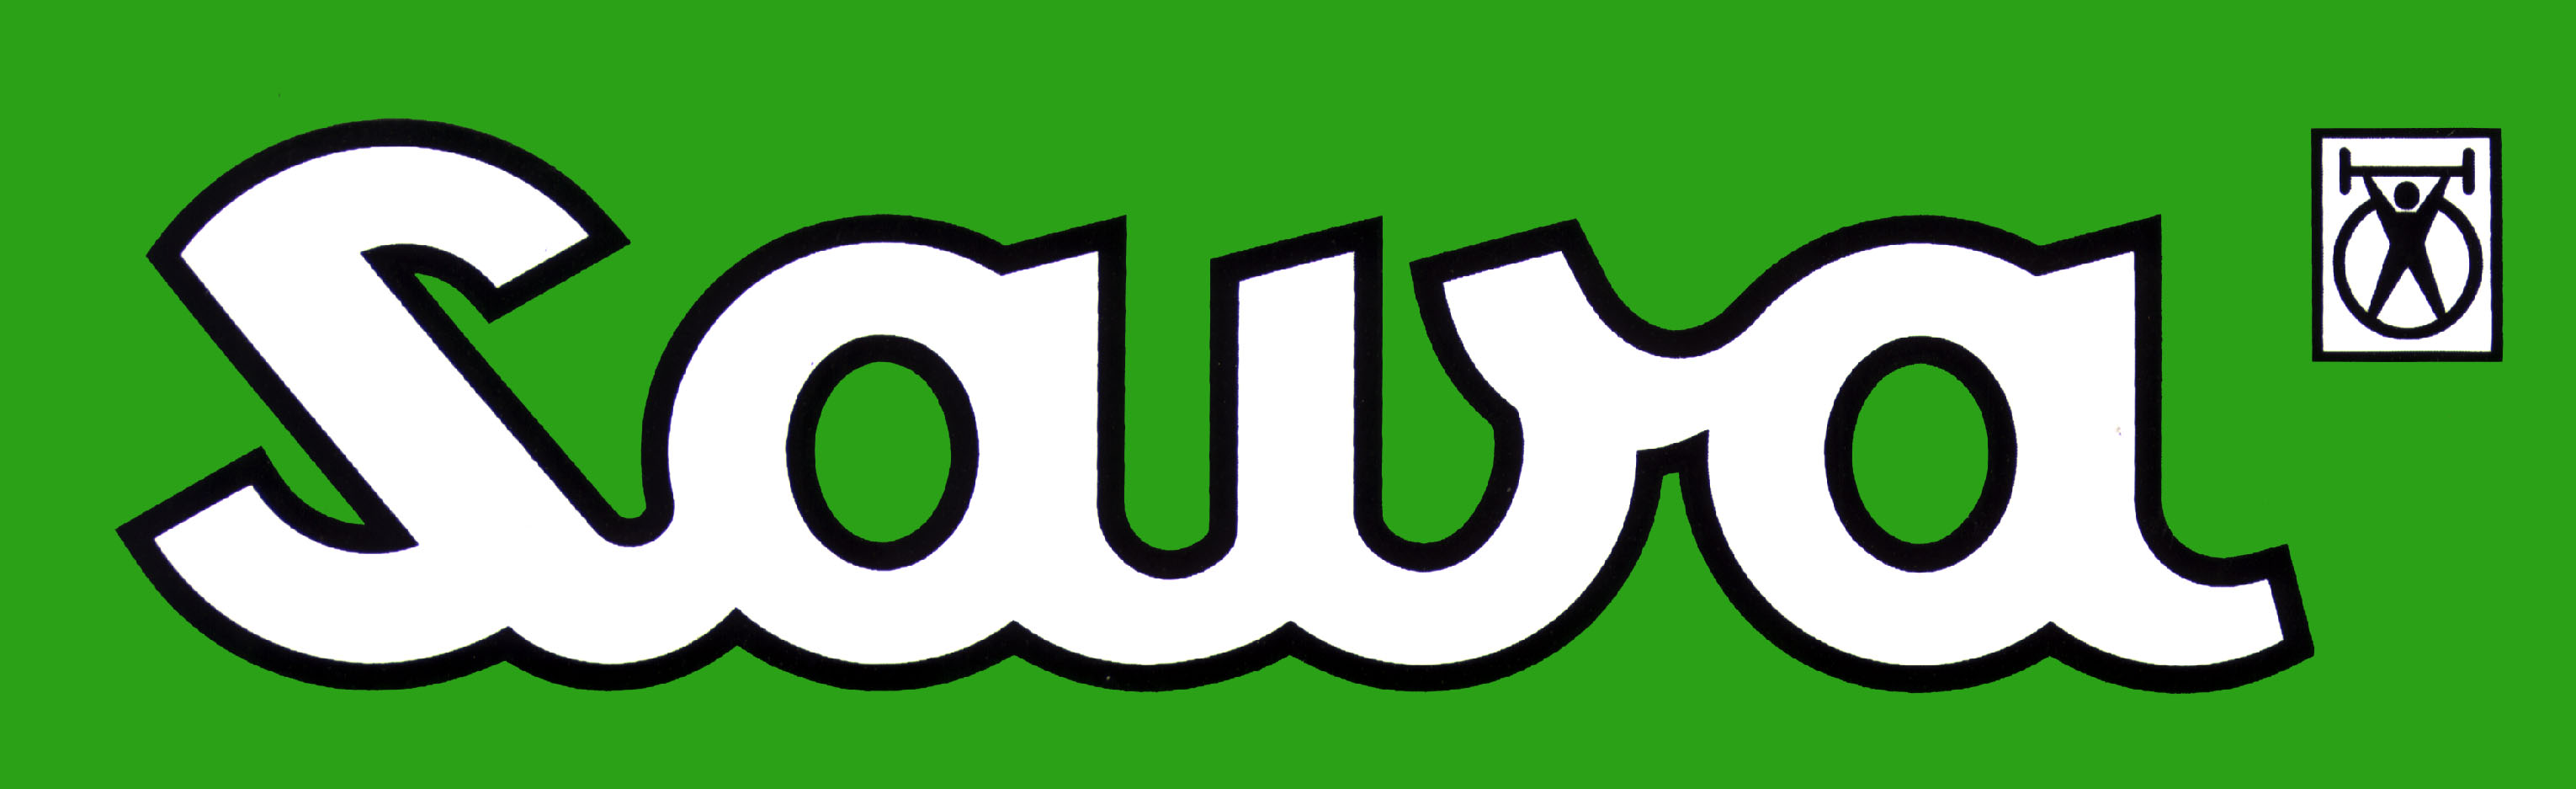 Производитель SAVA логотип